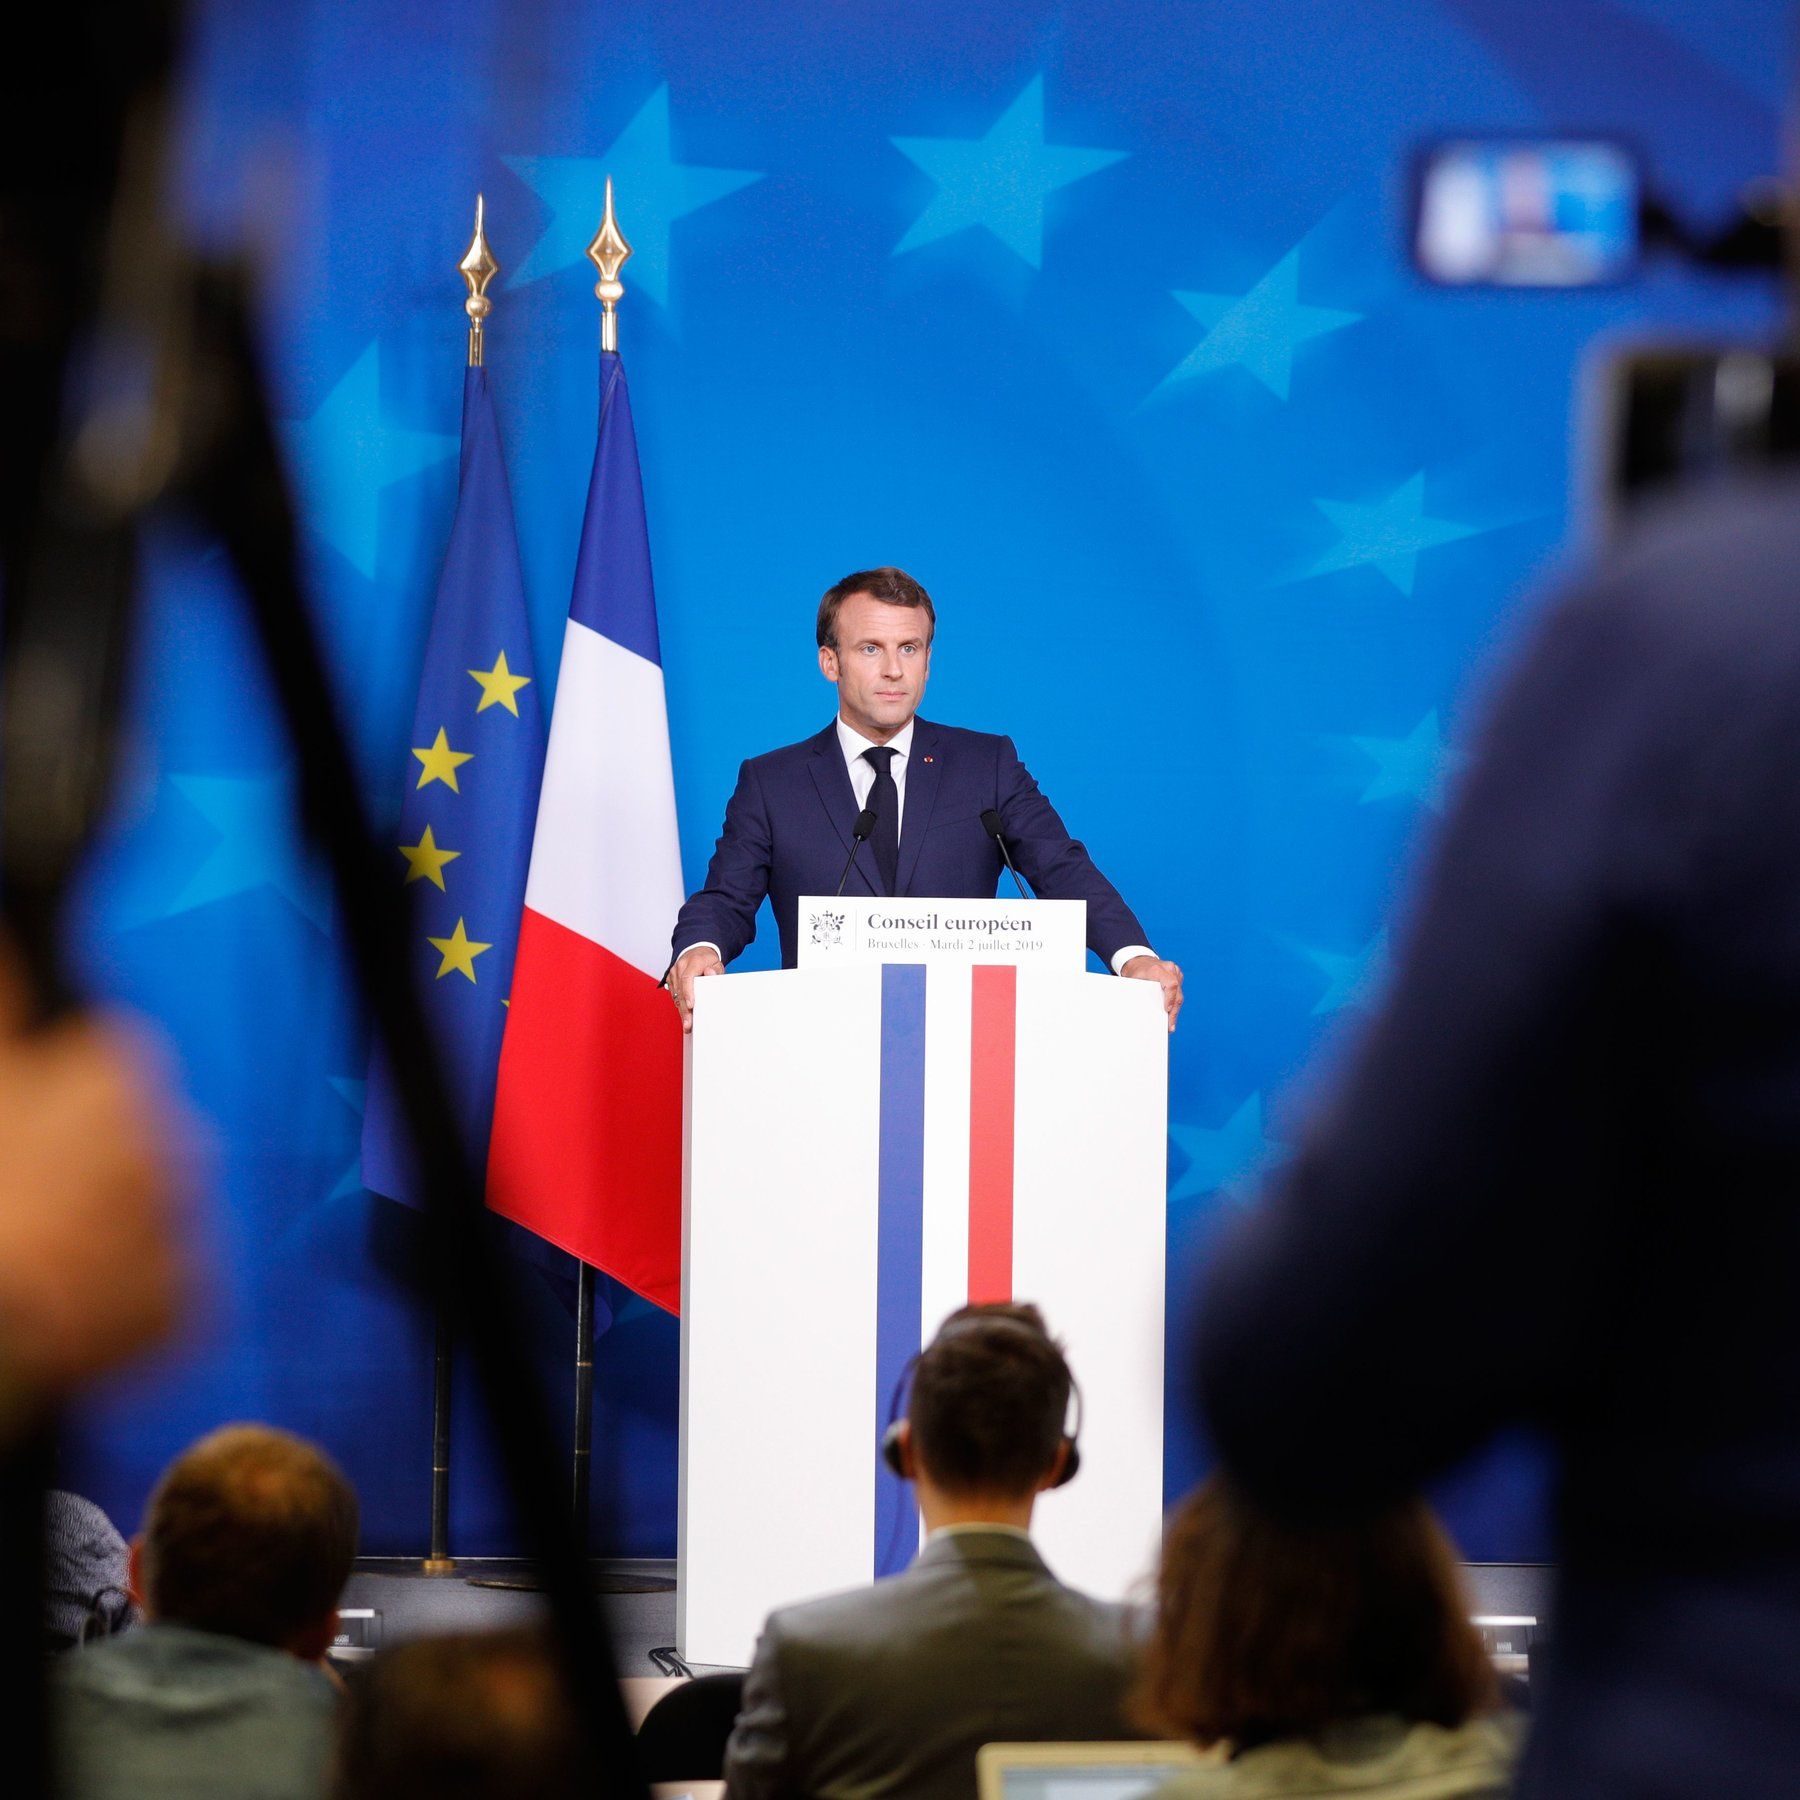 As Emmanuel Macron's Impact Grows, So Does French Disdain